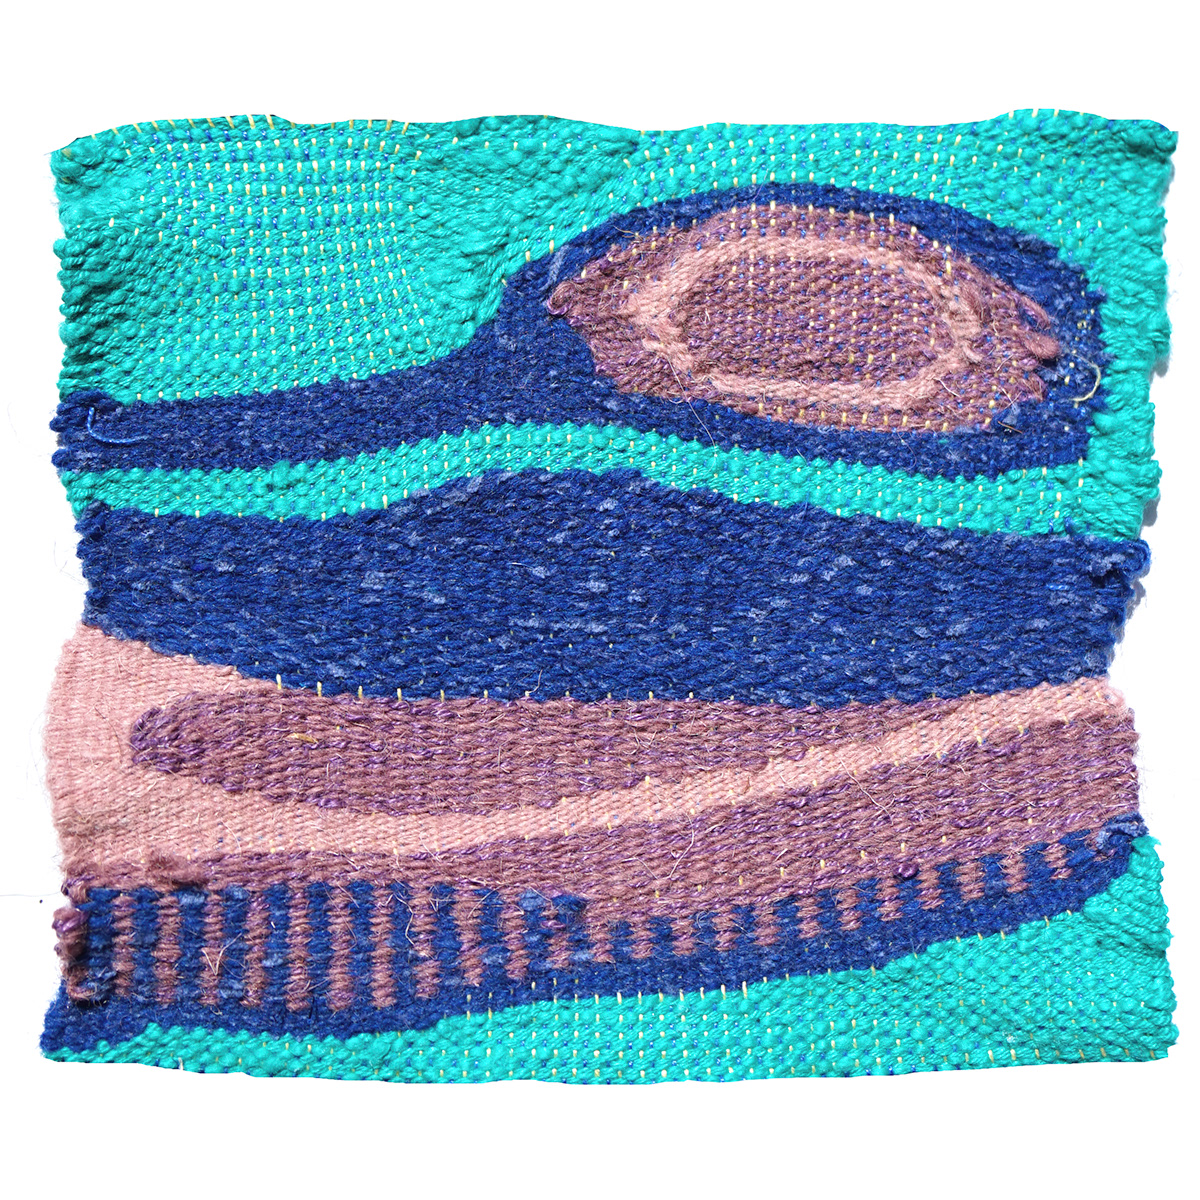 #fabric #samples #textile #textile design #weaving  #woven